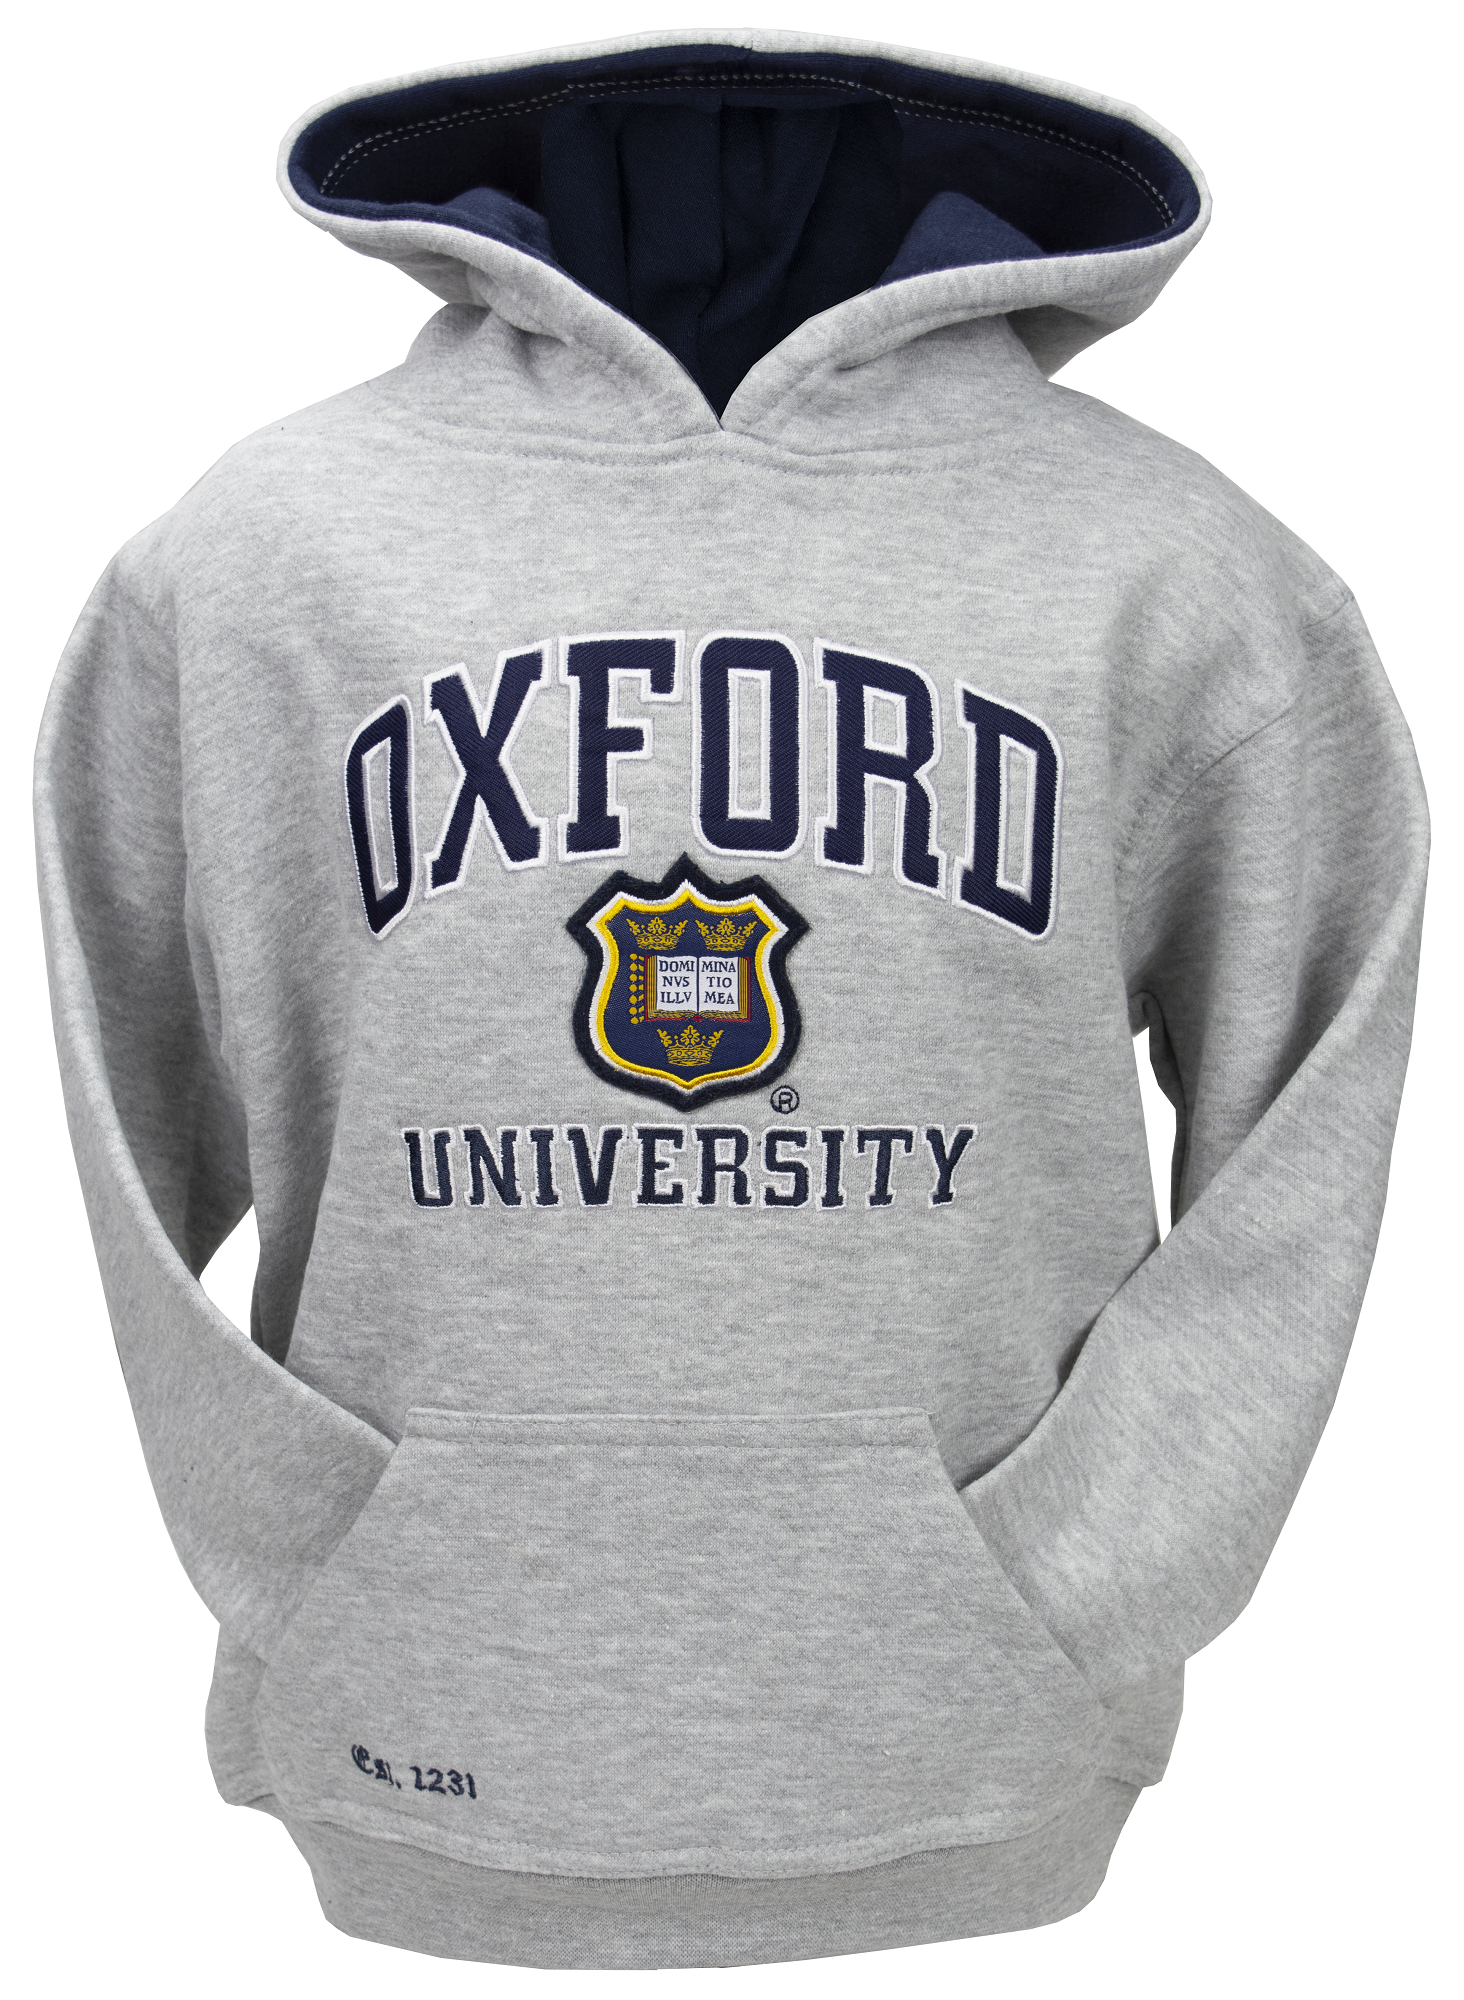 OU129K Kids Licensed Unisex Oxford University Hooded Sweatshirt Grey - British Heritage Brands